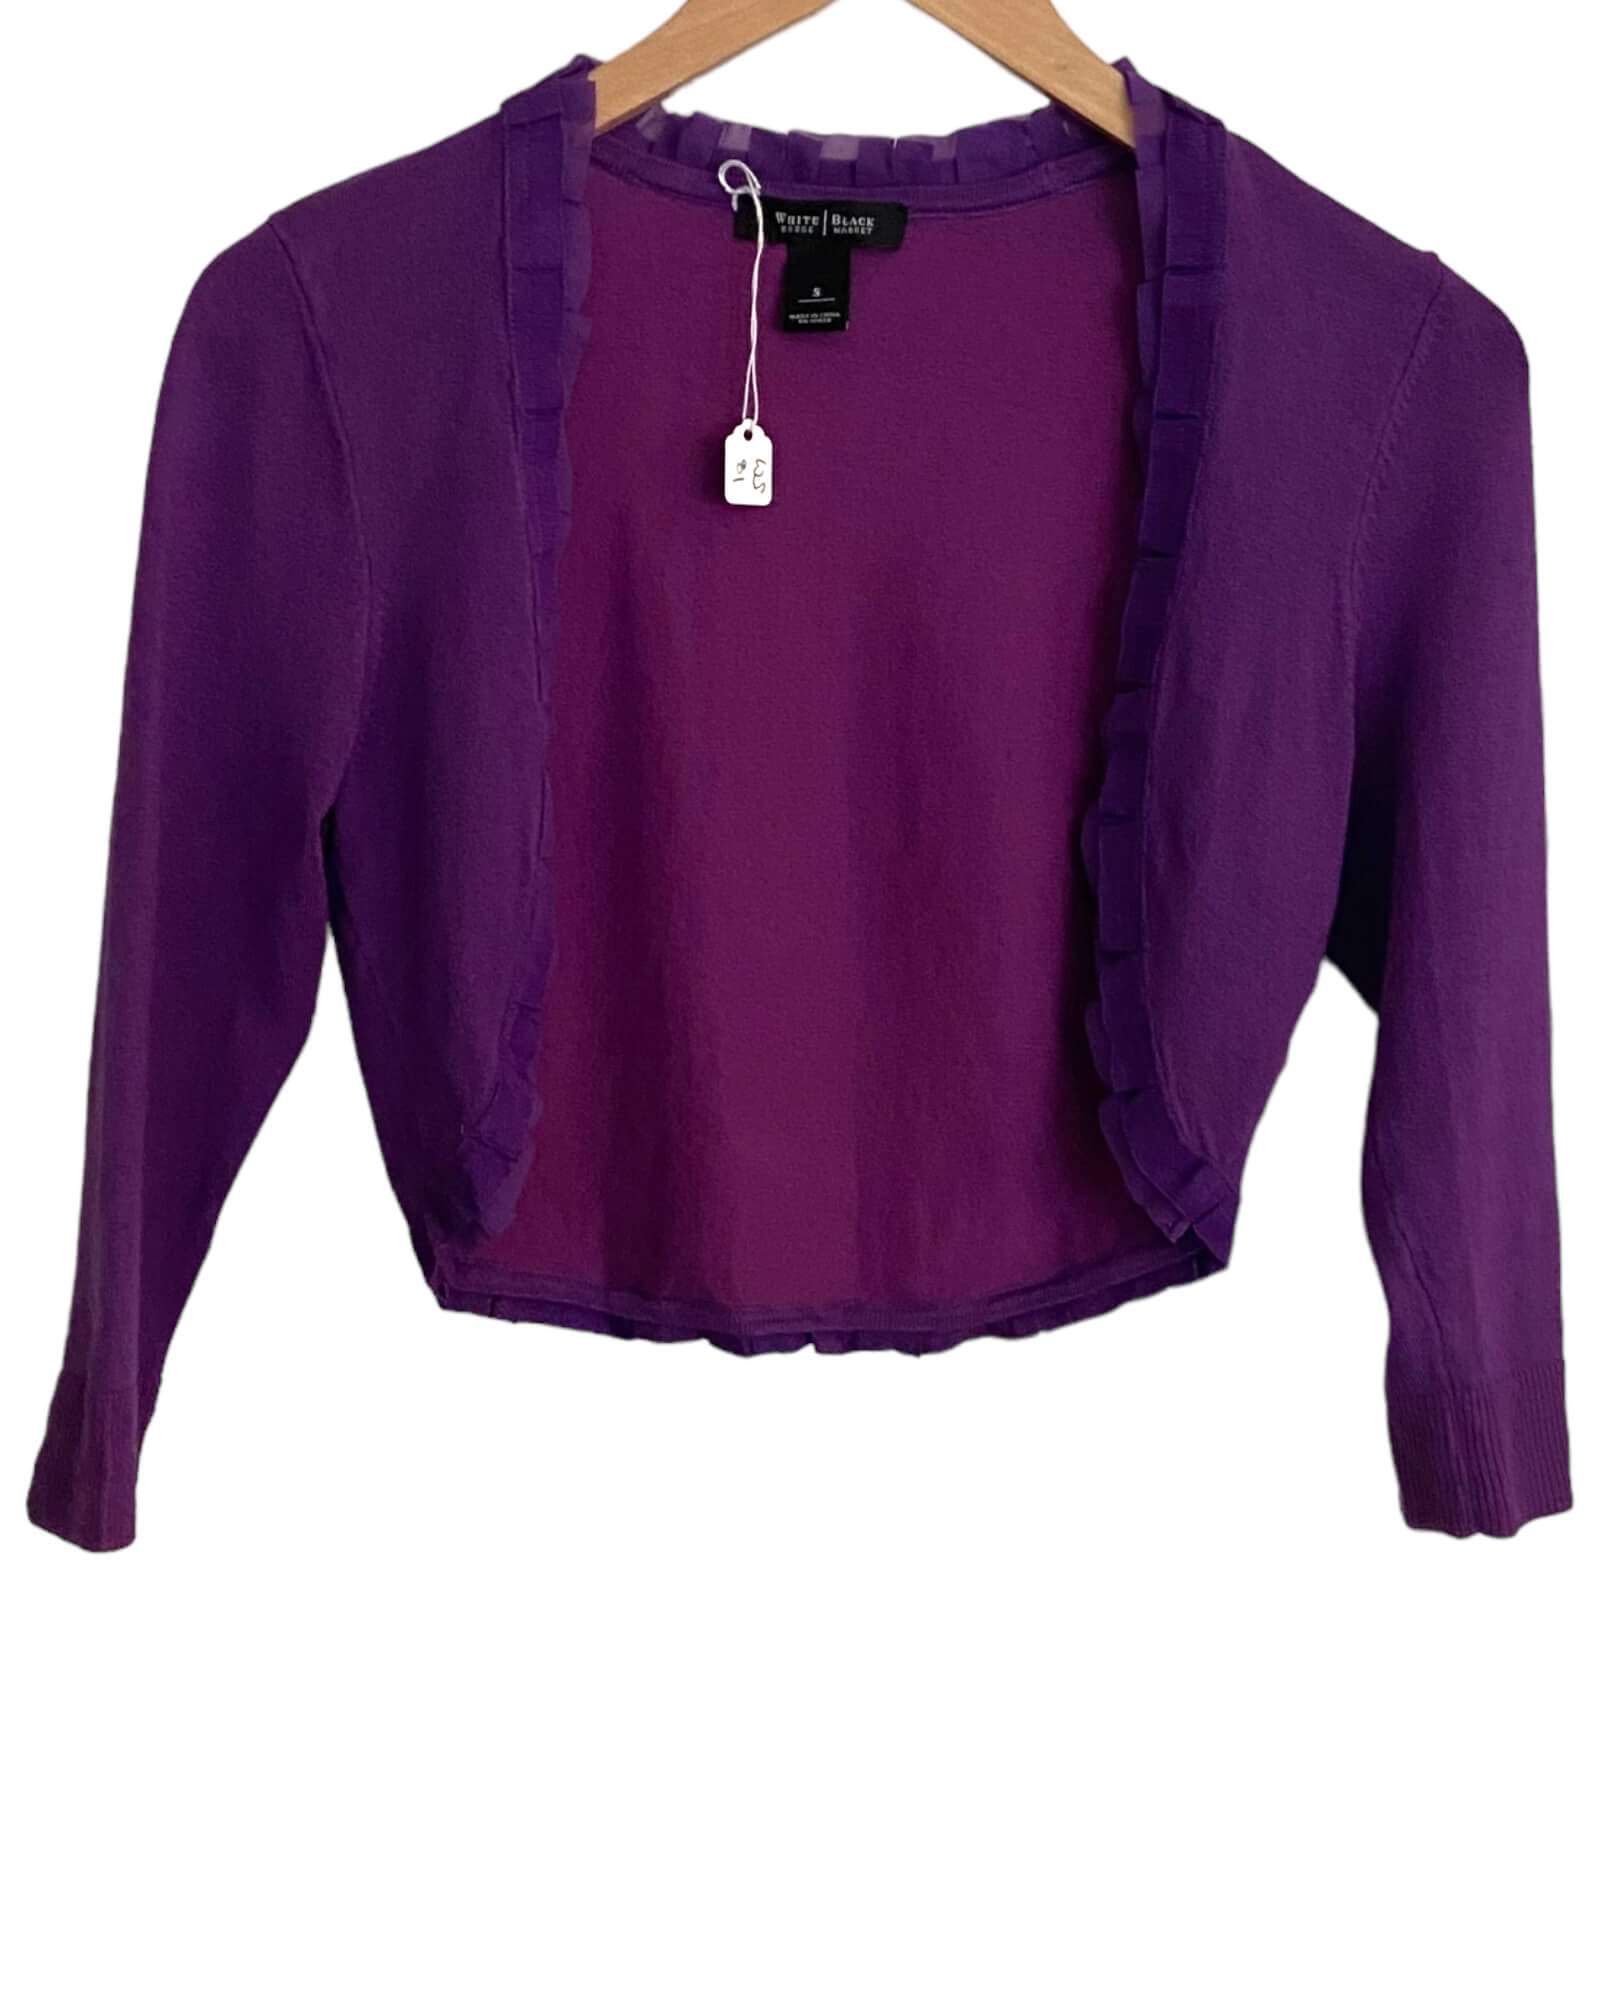 Warm Autumn White House Black Market Grape Purple Bolero Cardigan Sweater